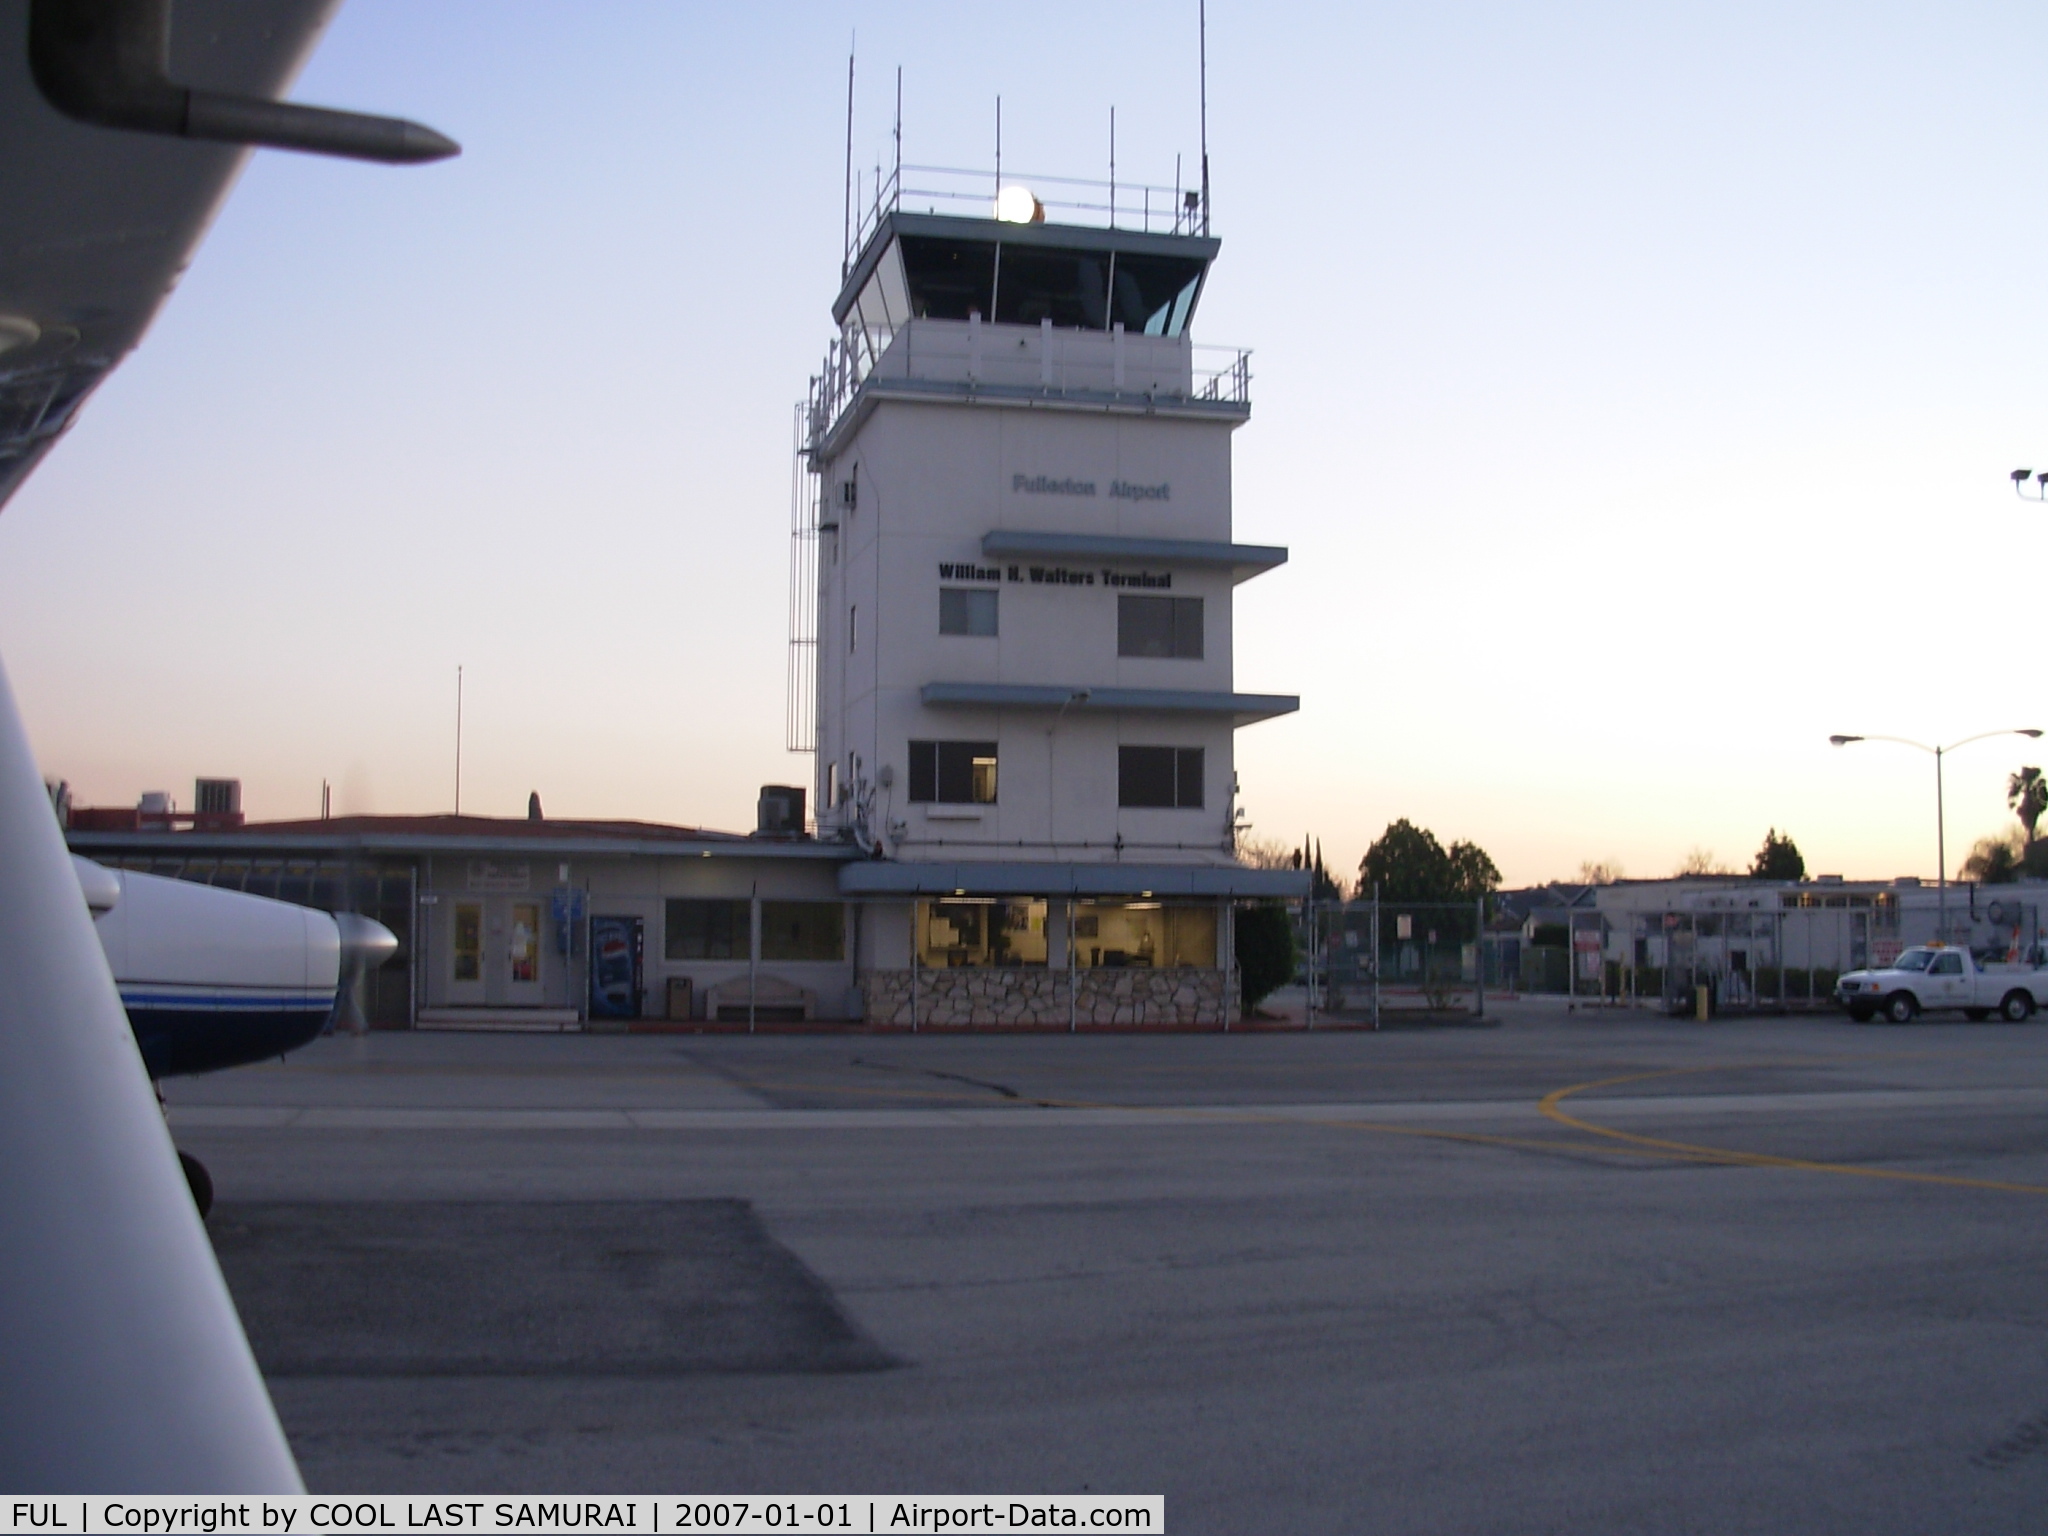 Fullerton Municipal Airport (FUL) - FUL TOWER